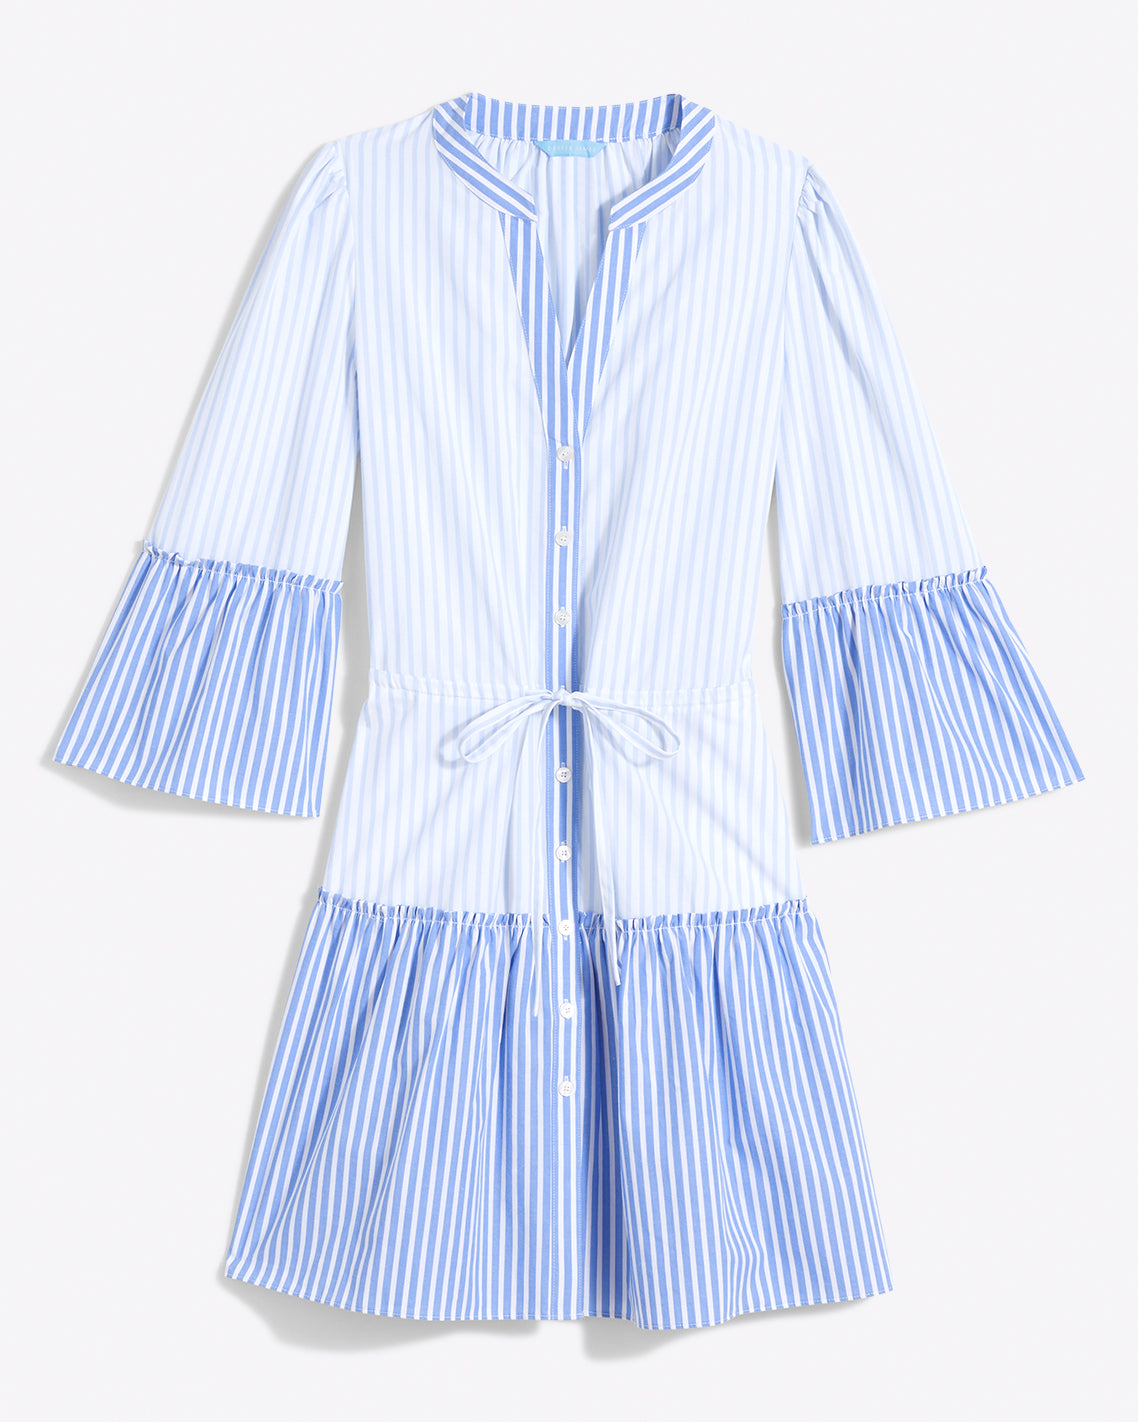 Avery Shirtdress in Mixed Stripe – Draper James